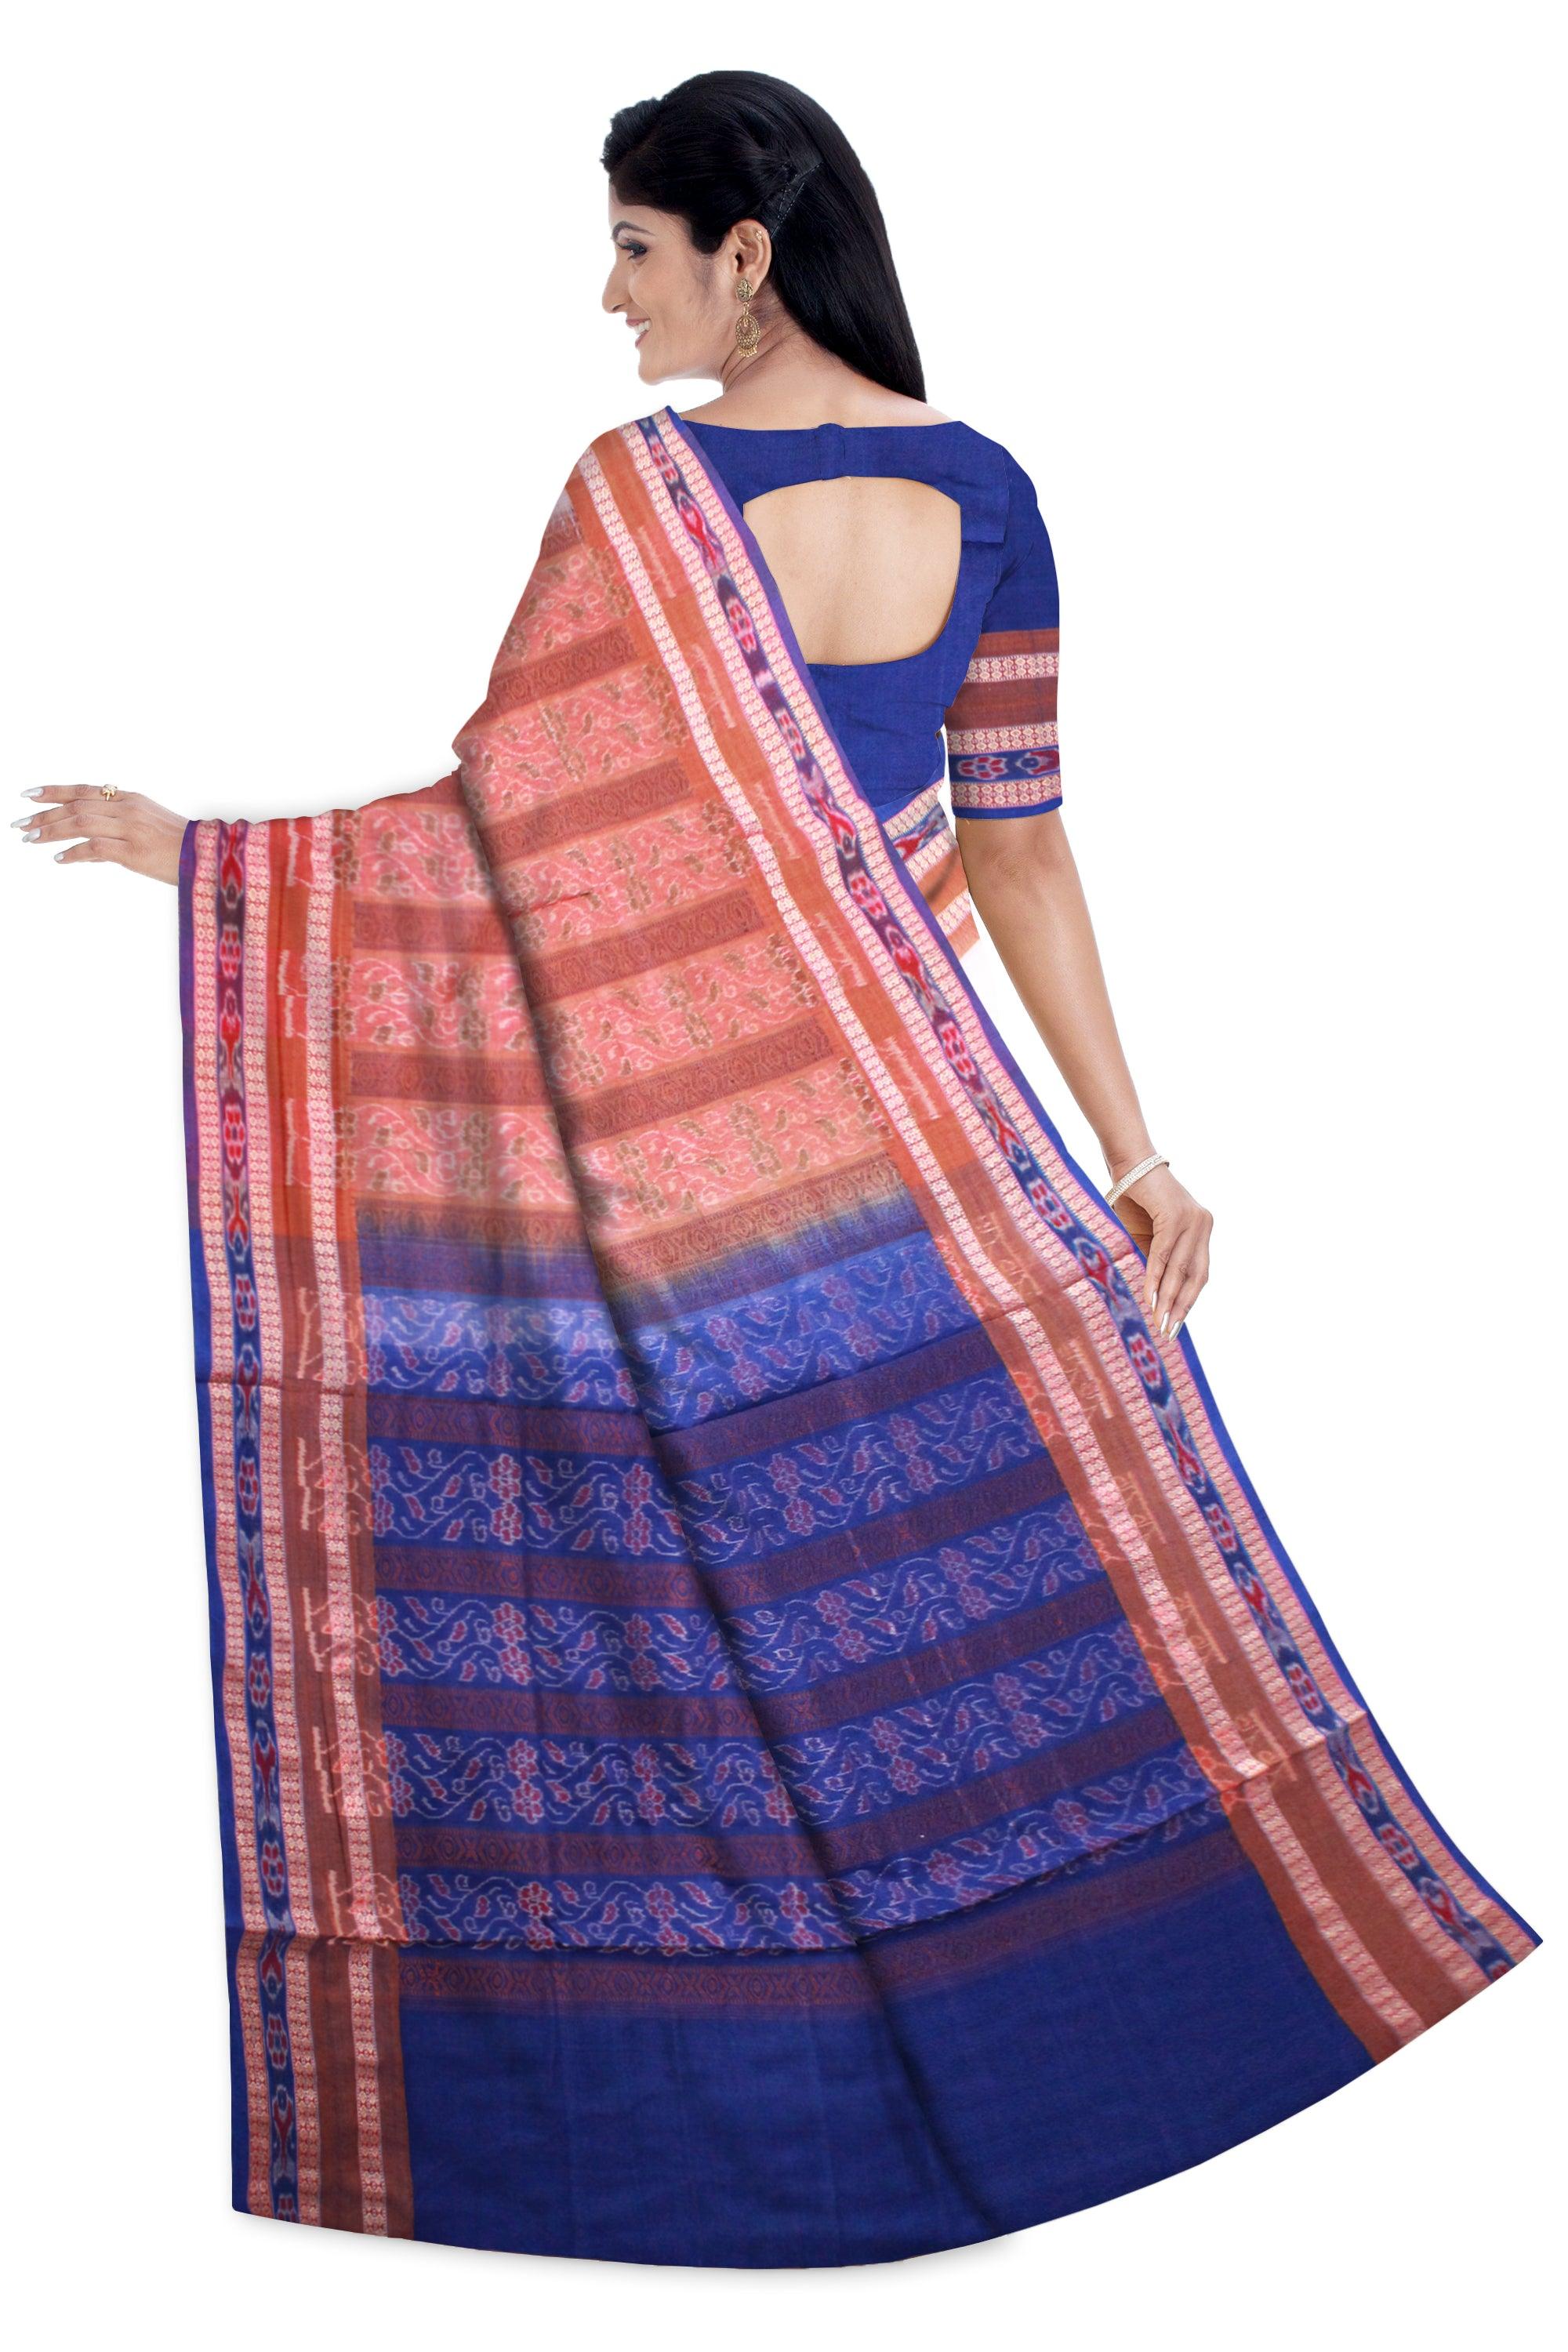 White color sambalpuri cotton saree with blouse piece. - Koshali Arts & Crafts Enterprise